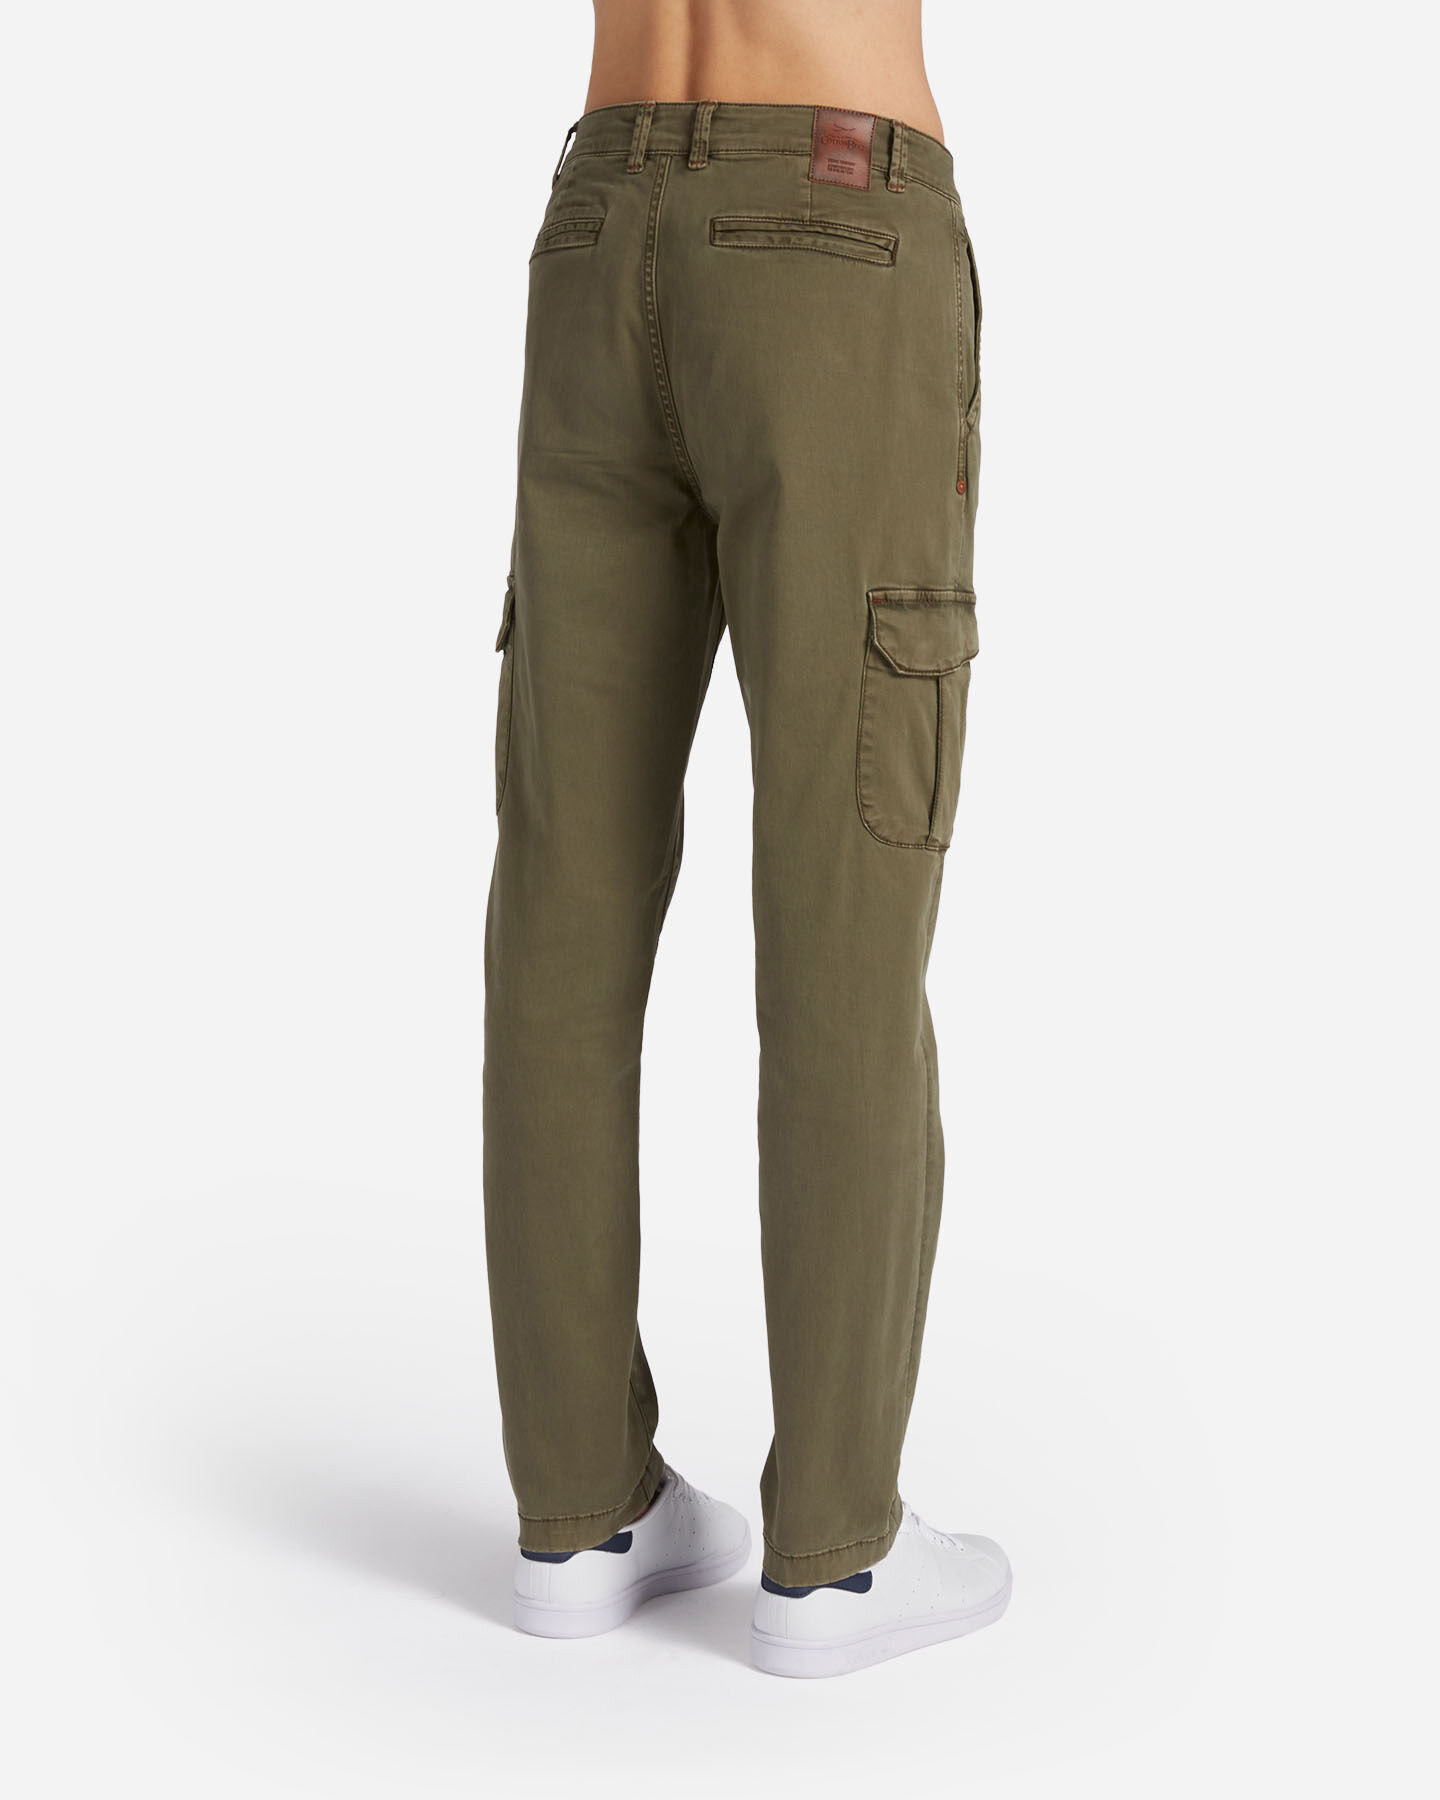  Pantalone COTTON BELT URBAN CARGO M S4127007|1124|30 scatto 1